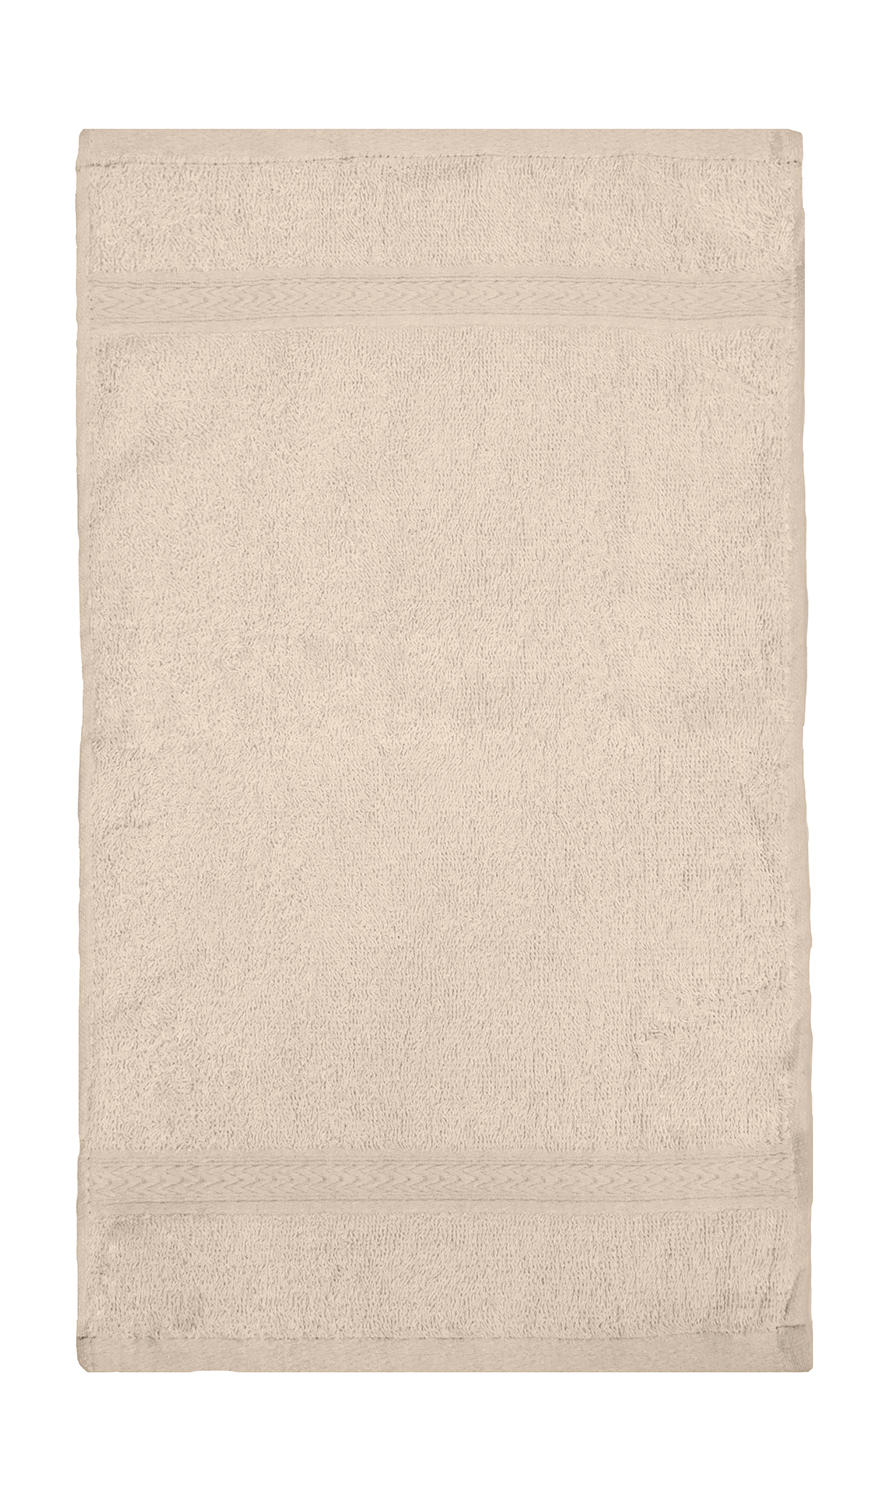  Rhine Guest Towel 30x50 cm in Farbe Sand